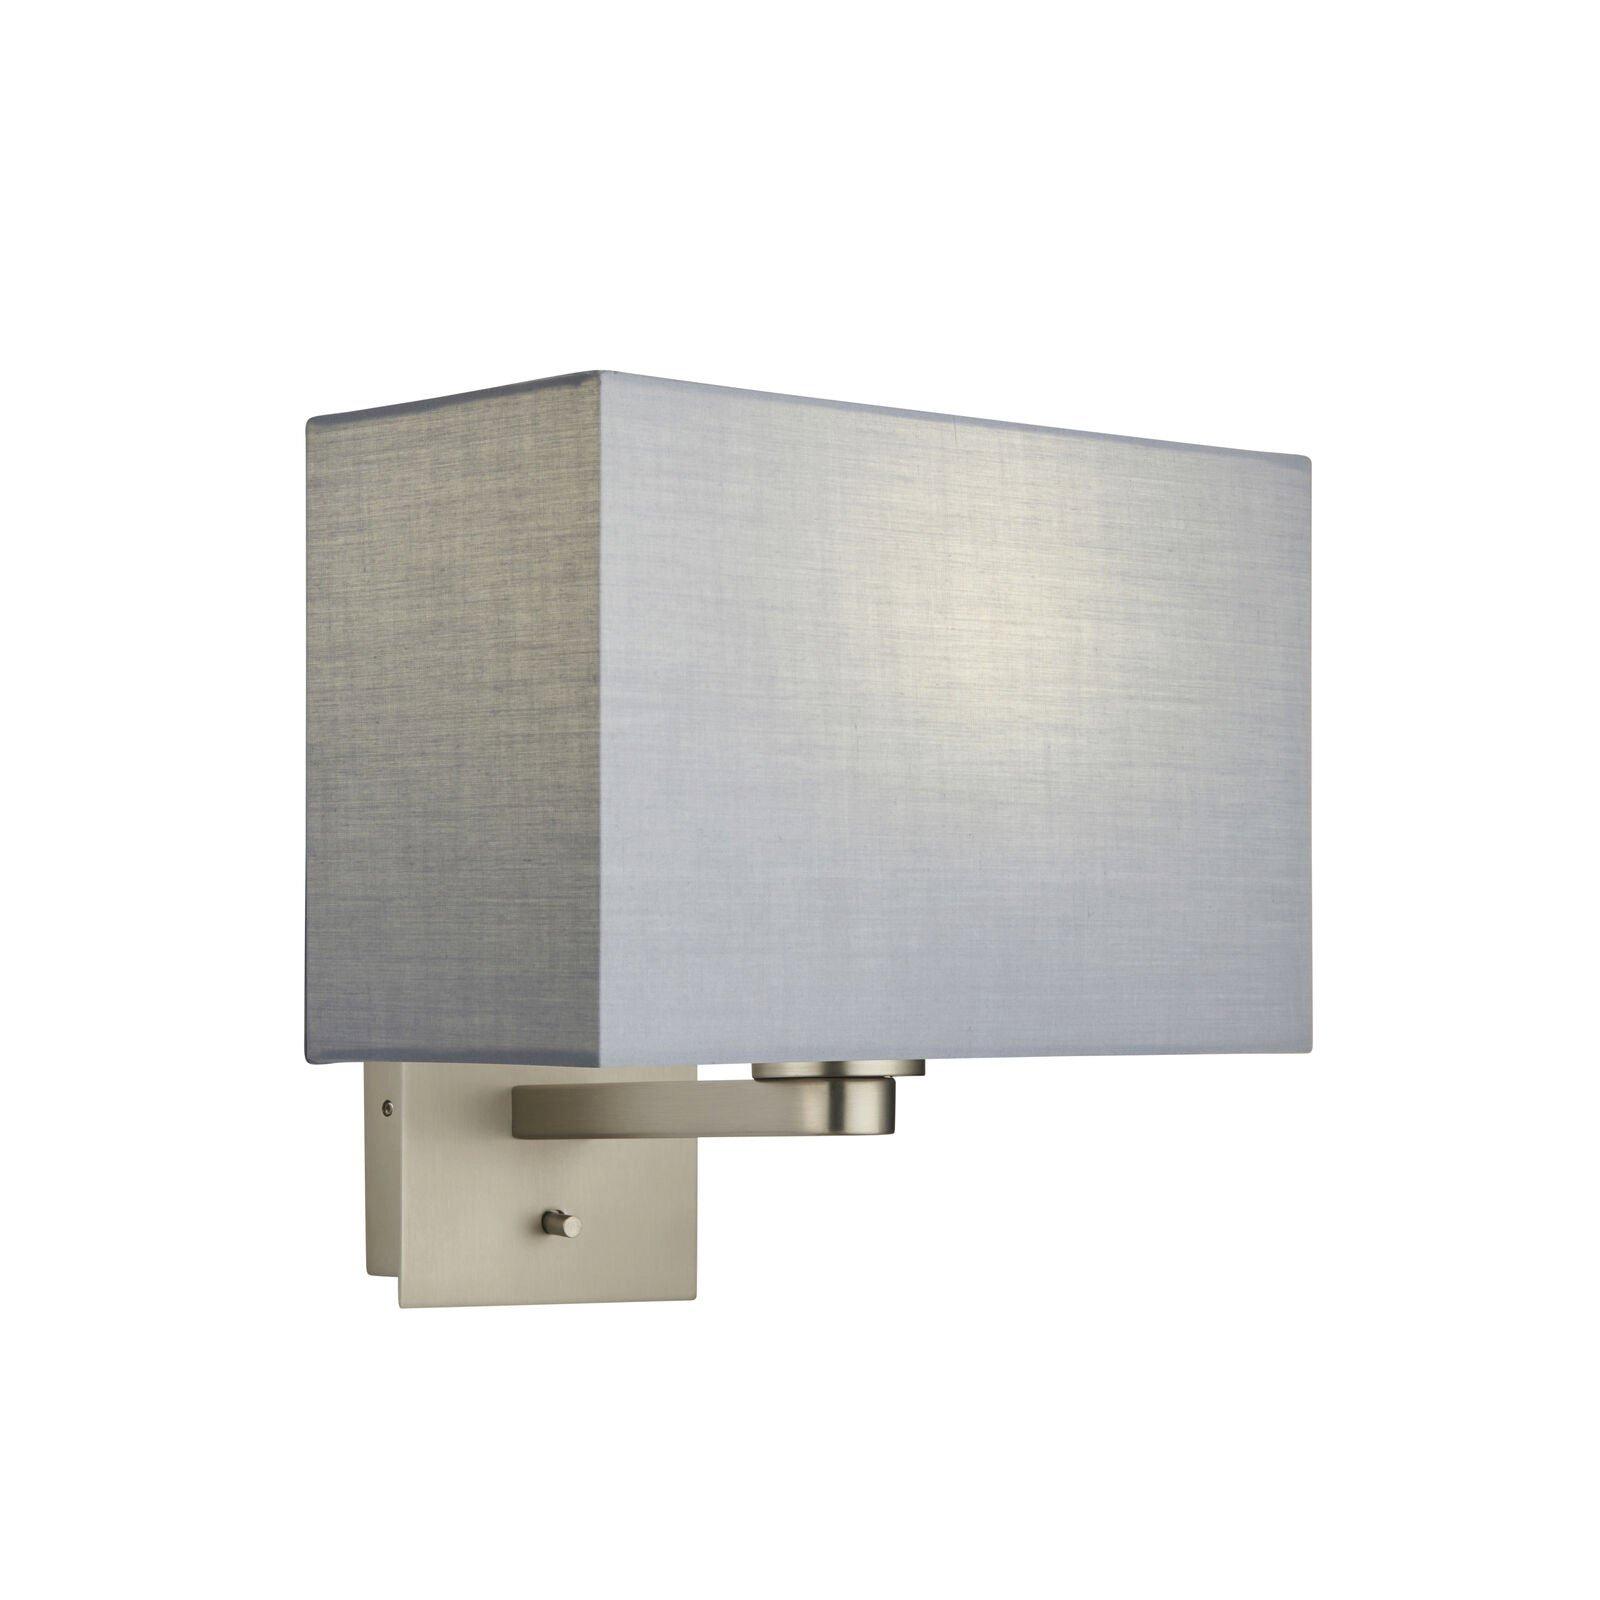 Wall Light & Shade Matt Nickel & Grey Fabric 60W E27 Living Room e10296